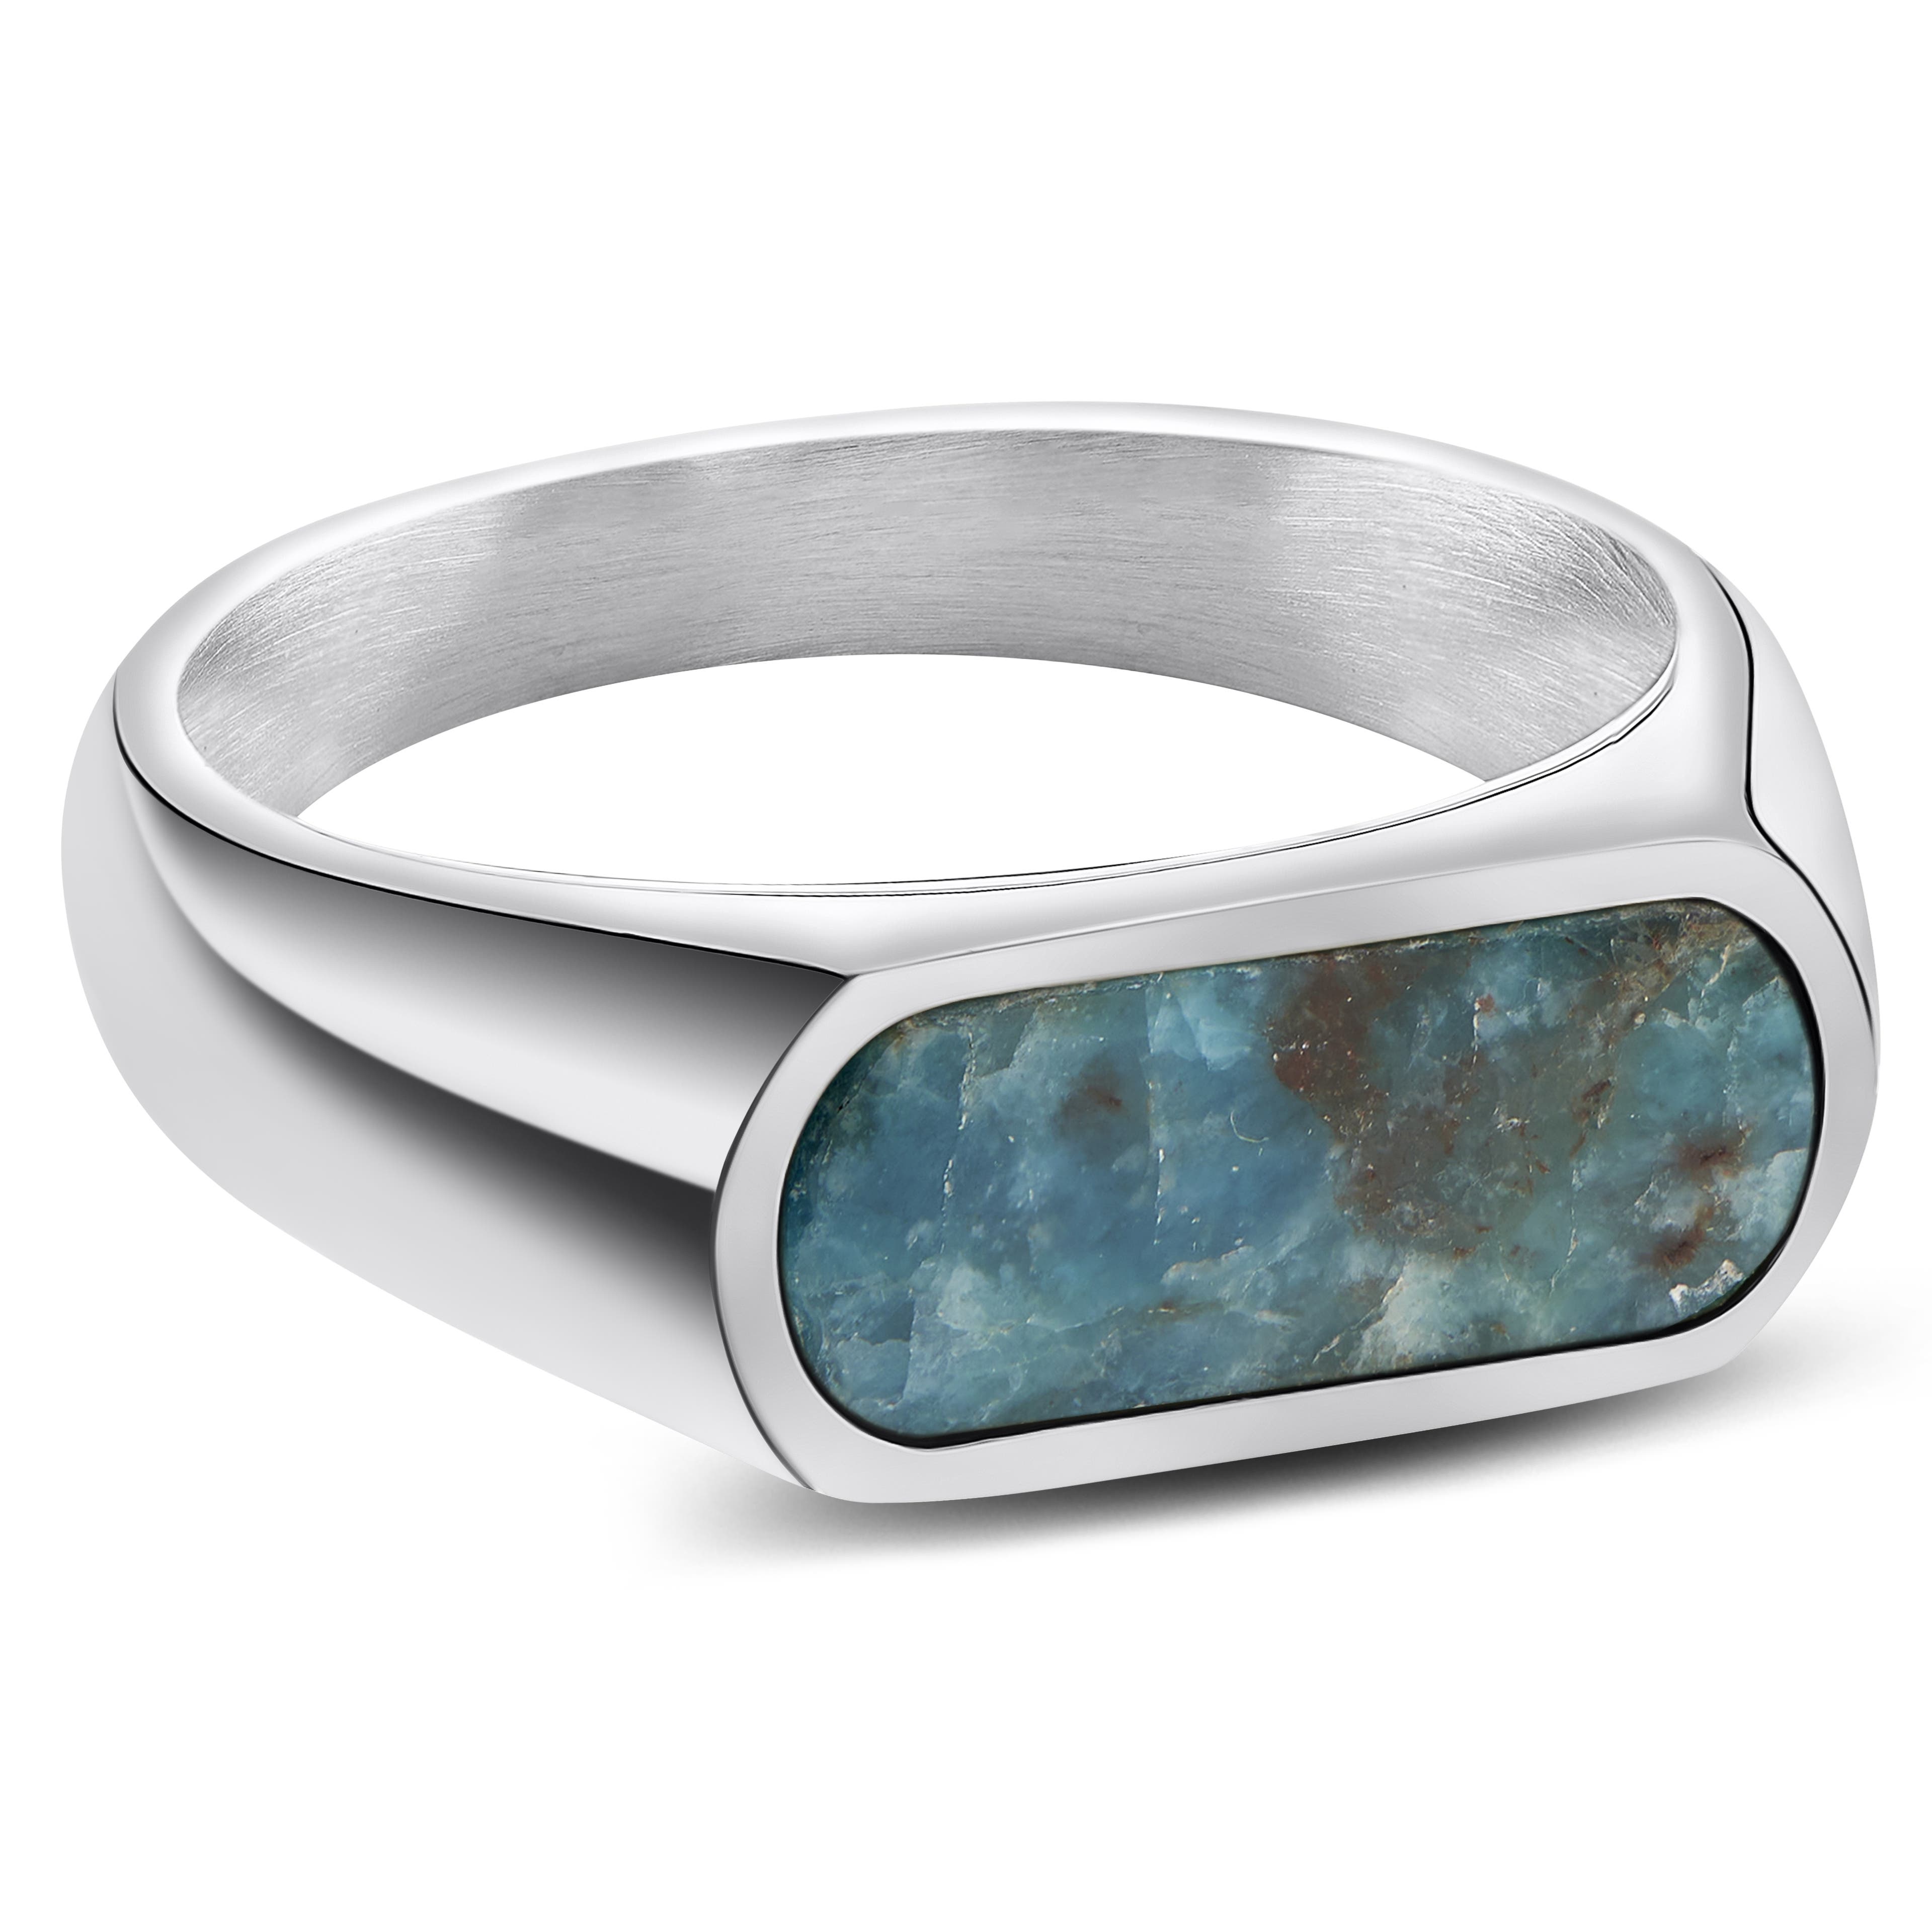 Orisun | Silver-Tone Stainless Steel Apatite Stone Signet Ring